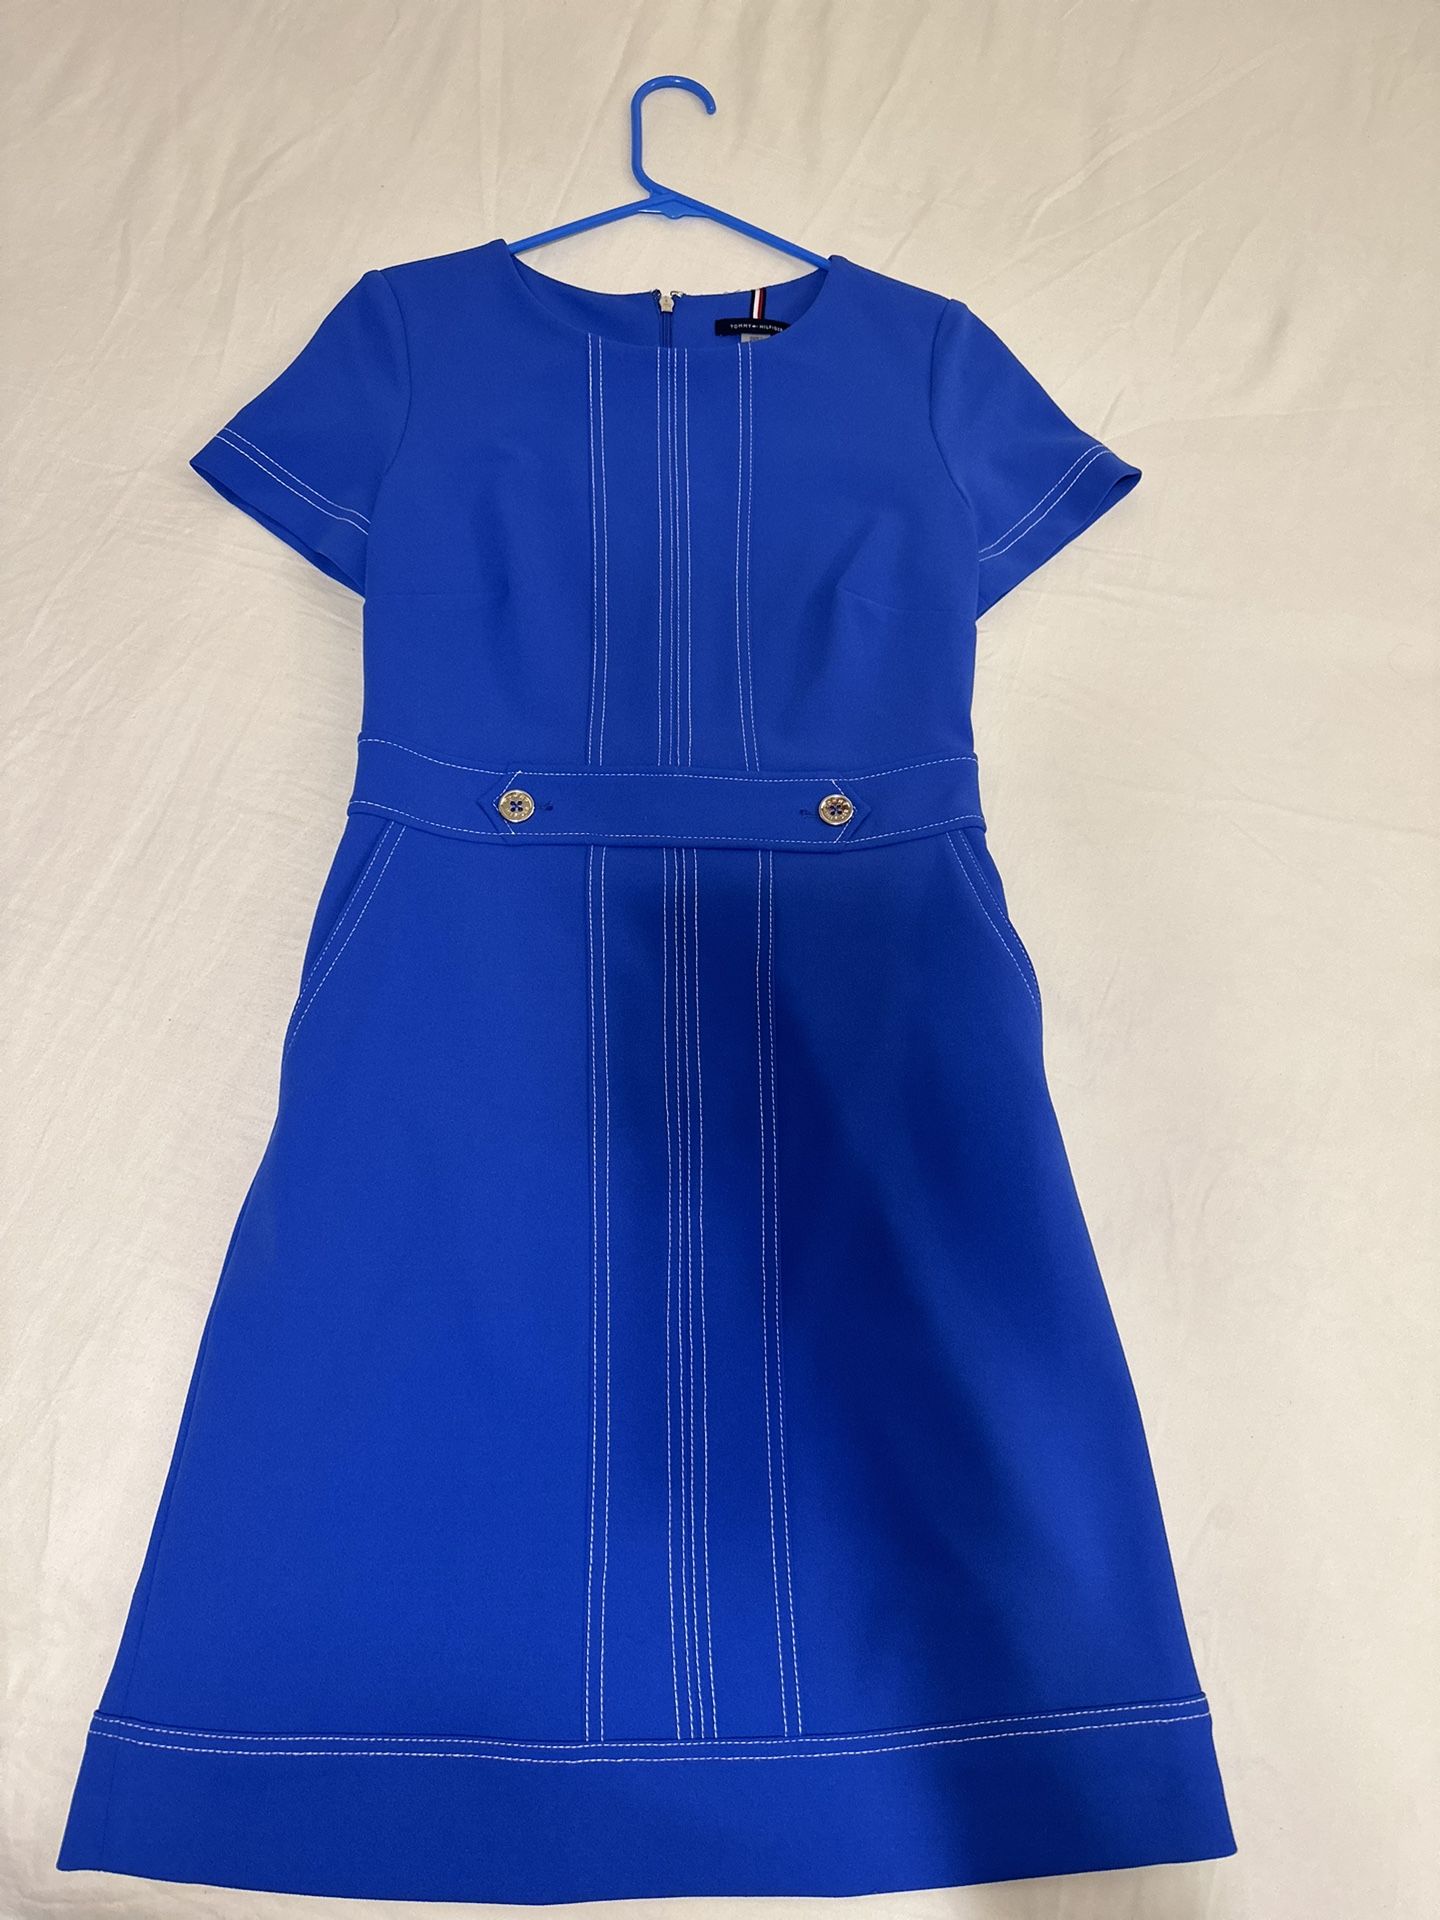 Women Tommy Hilfiger Royal Blue Dress 